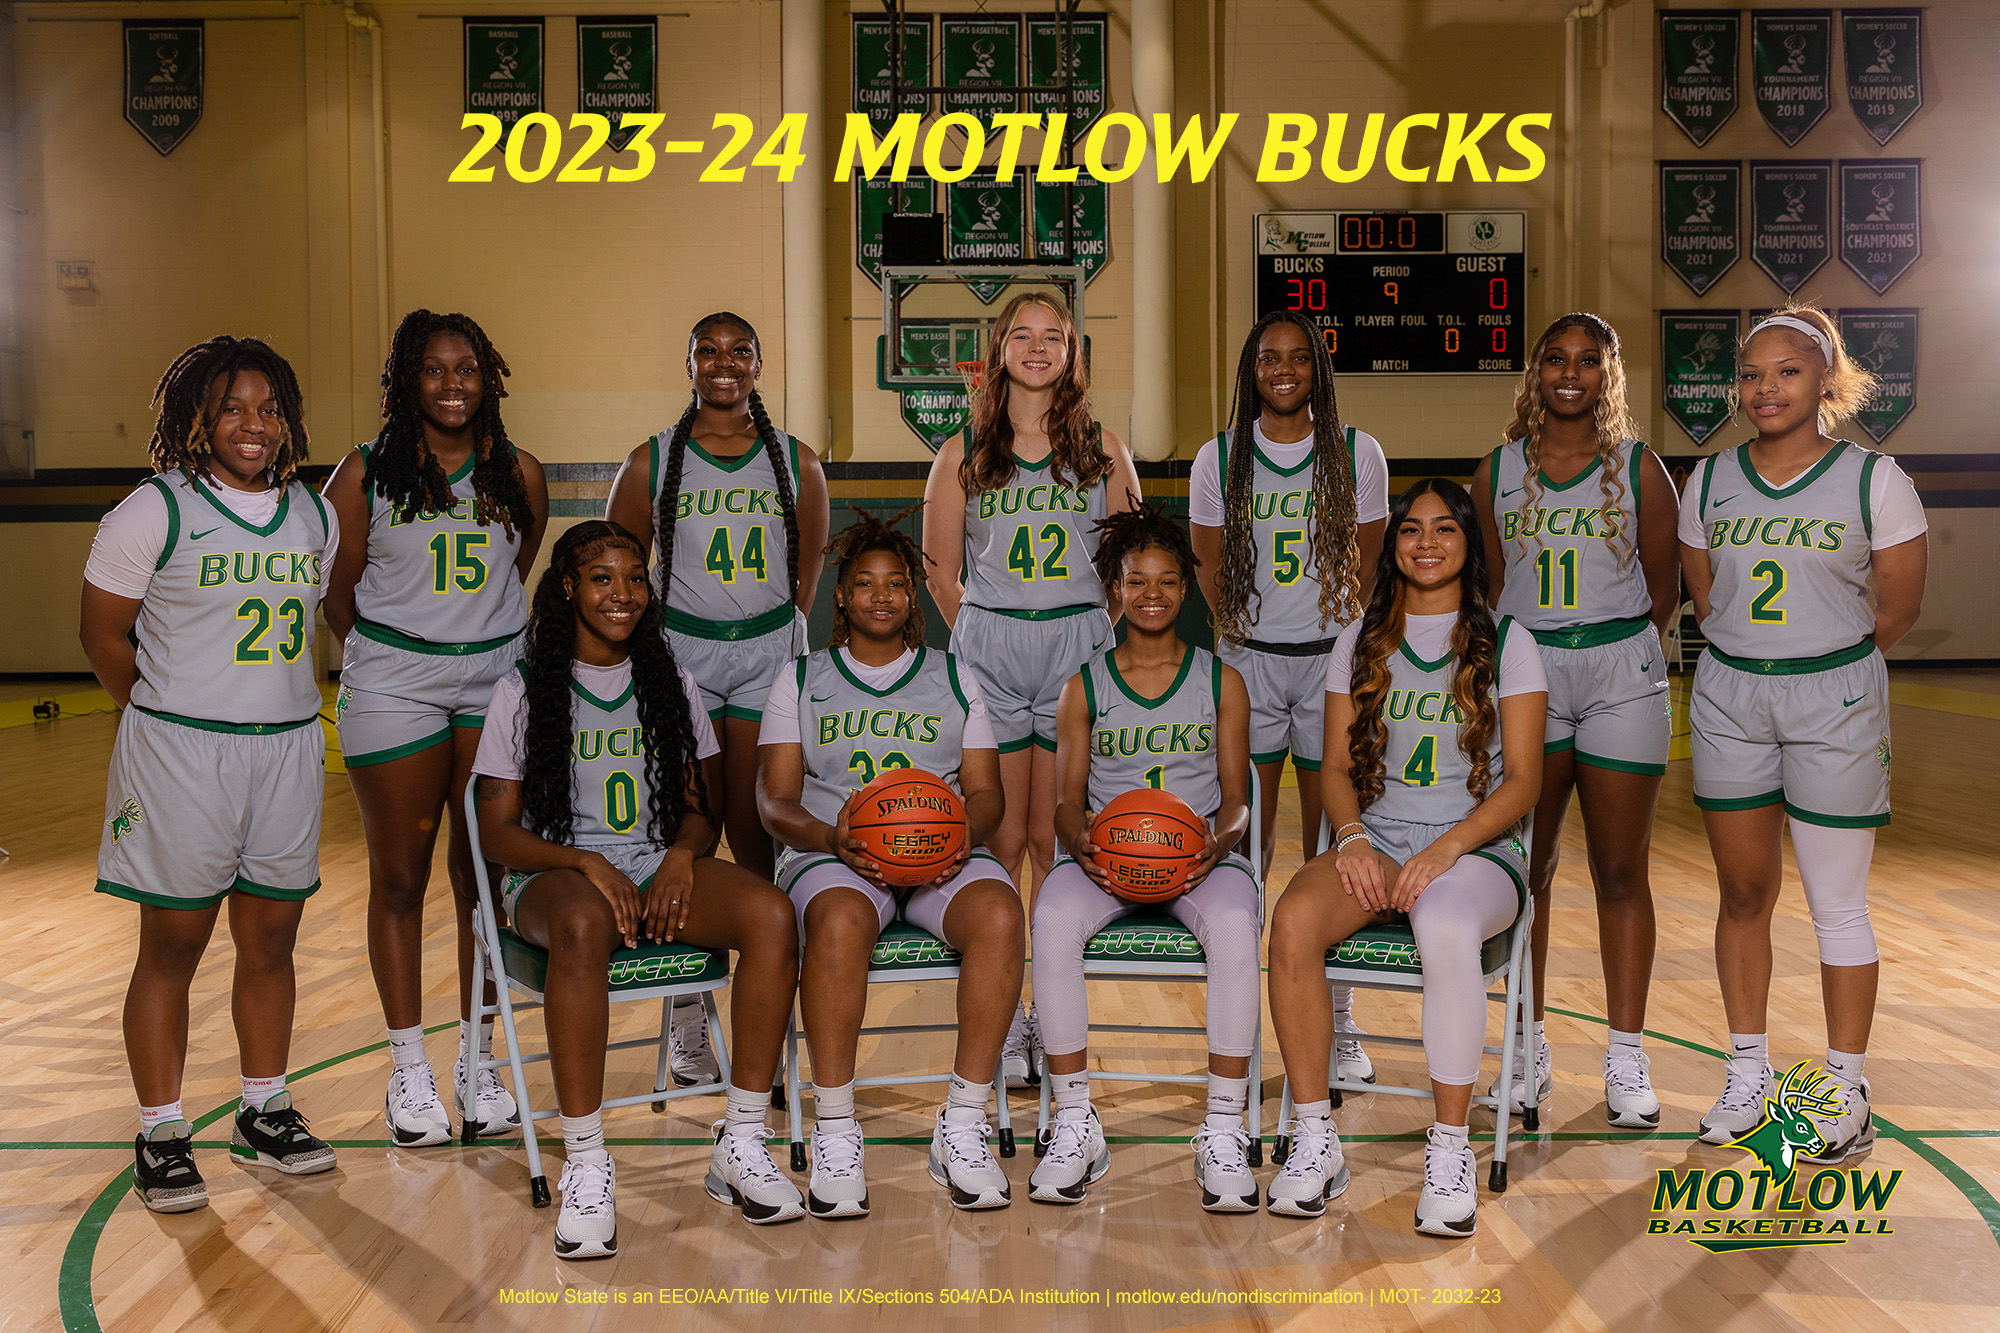 2023-24 Motlow Bucks